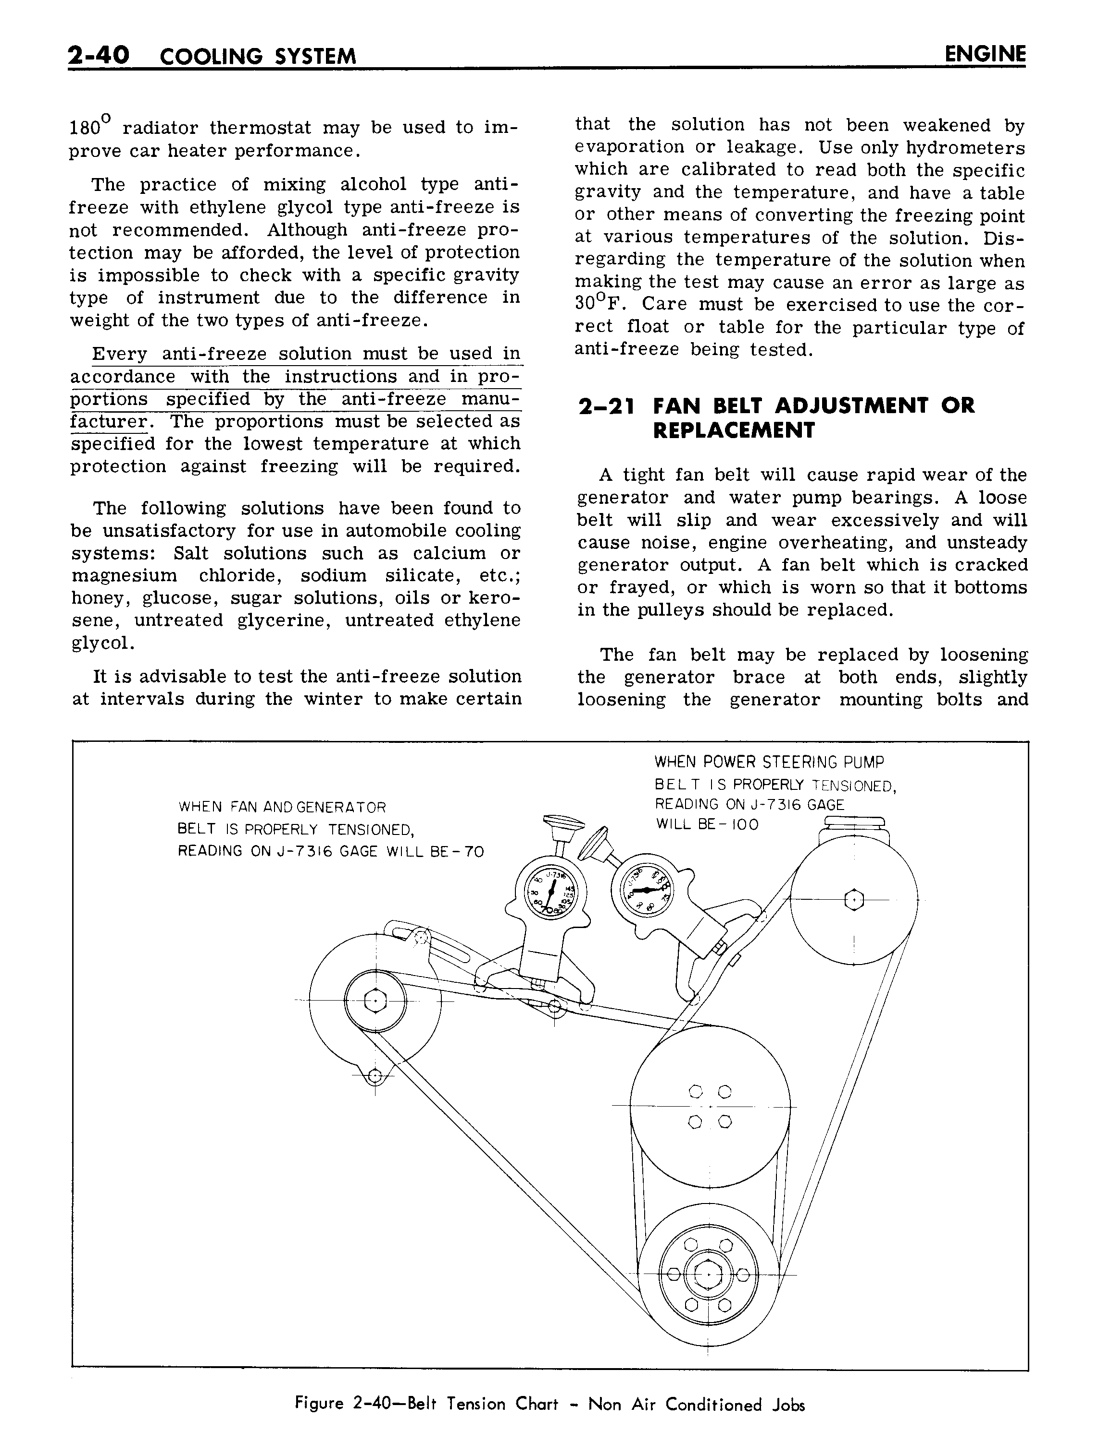 n_03 1961 Buick Shop Manual - Engine-040-040.jpg